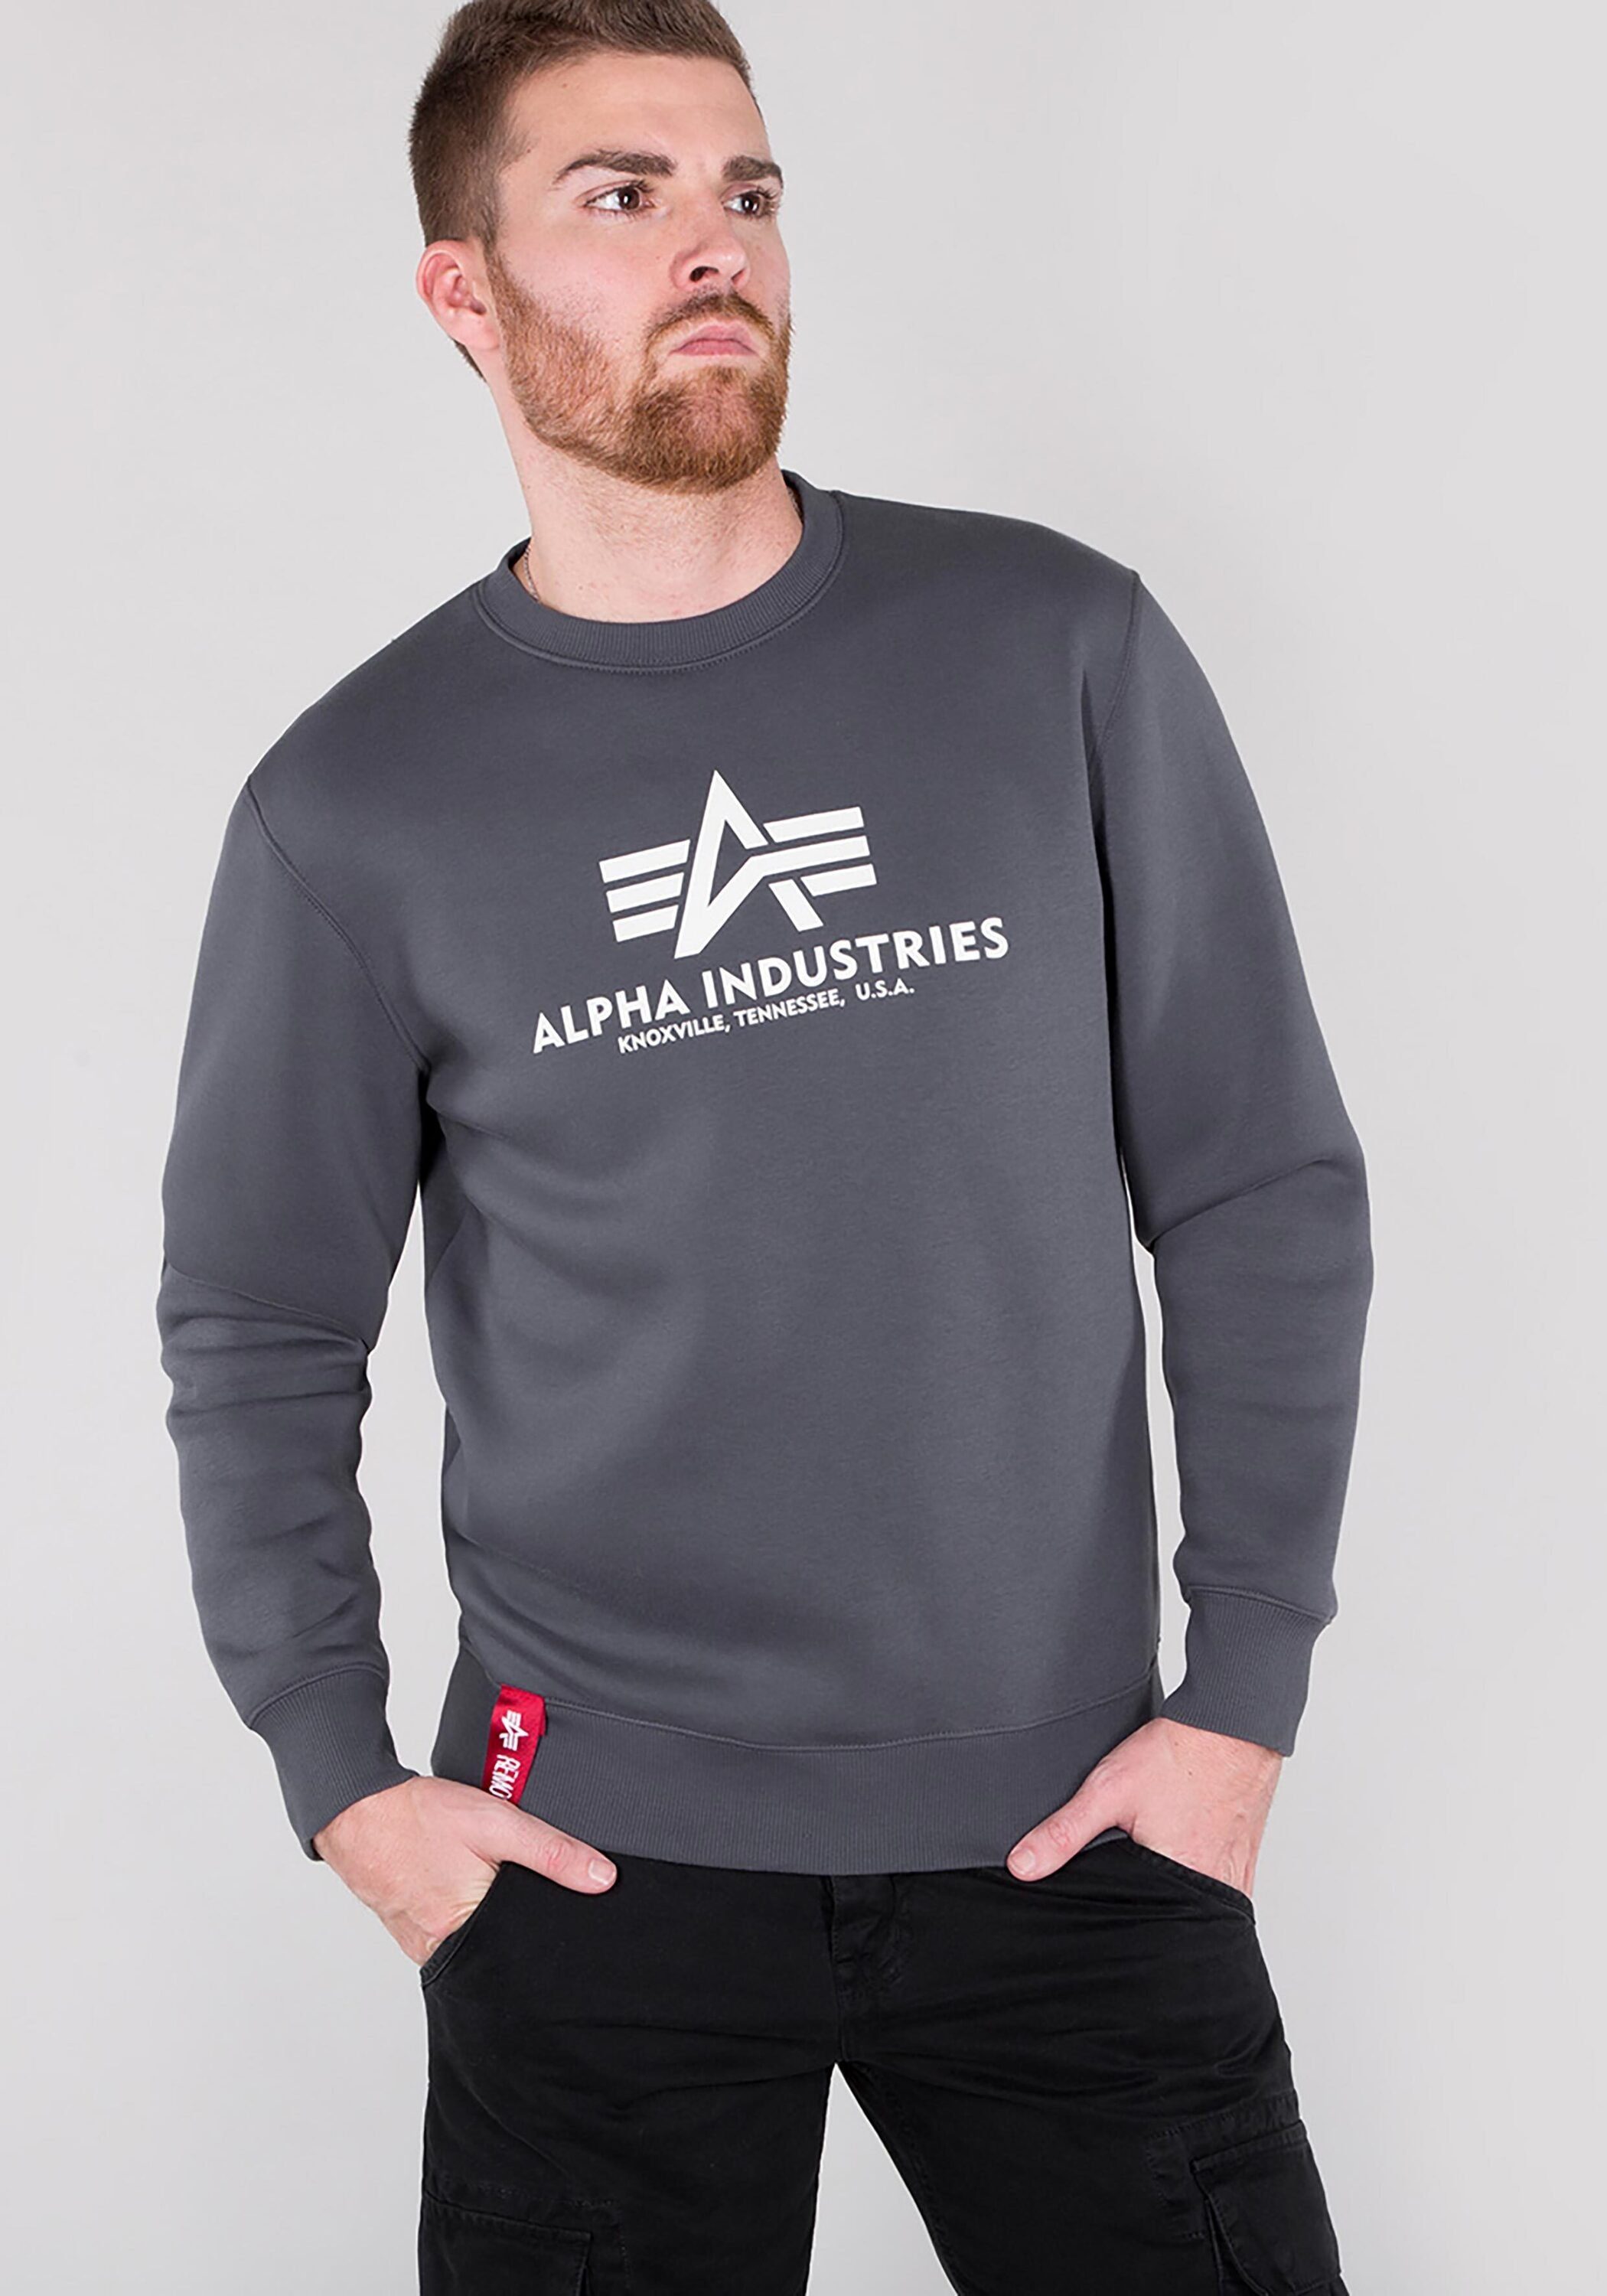 Alpha Sweater Basic Sweater Industries Alpha Industries Sweatshirts - greyblack Men